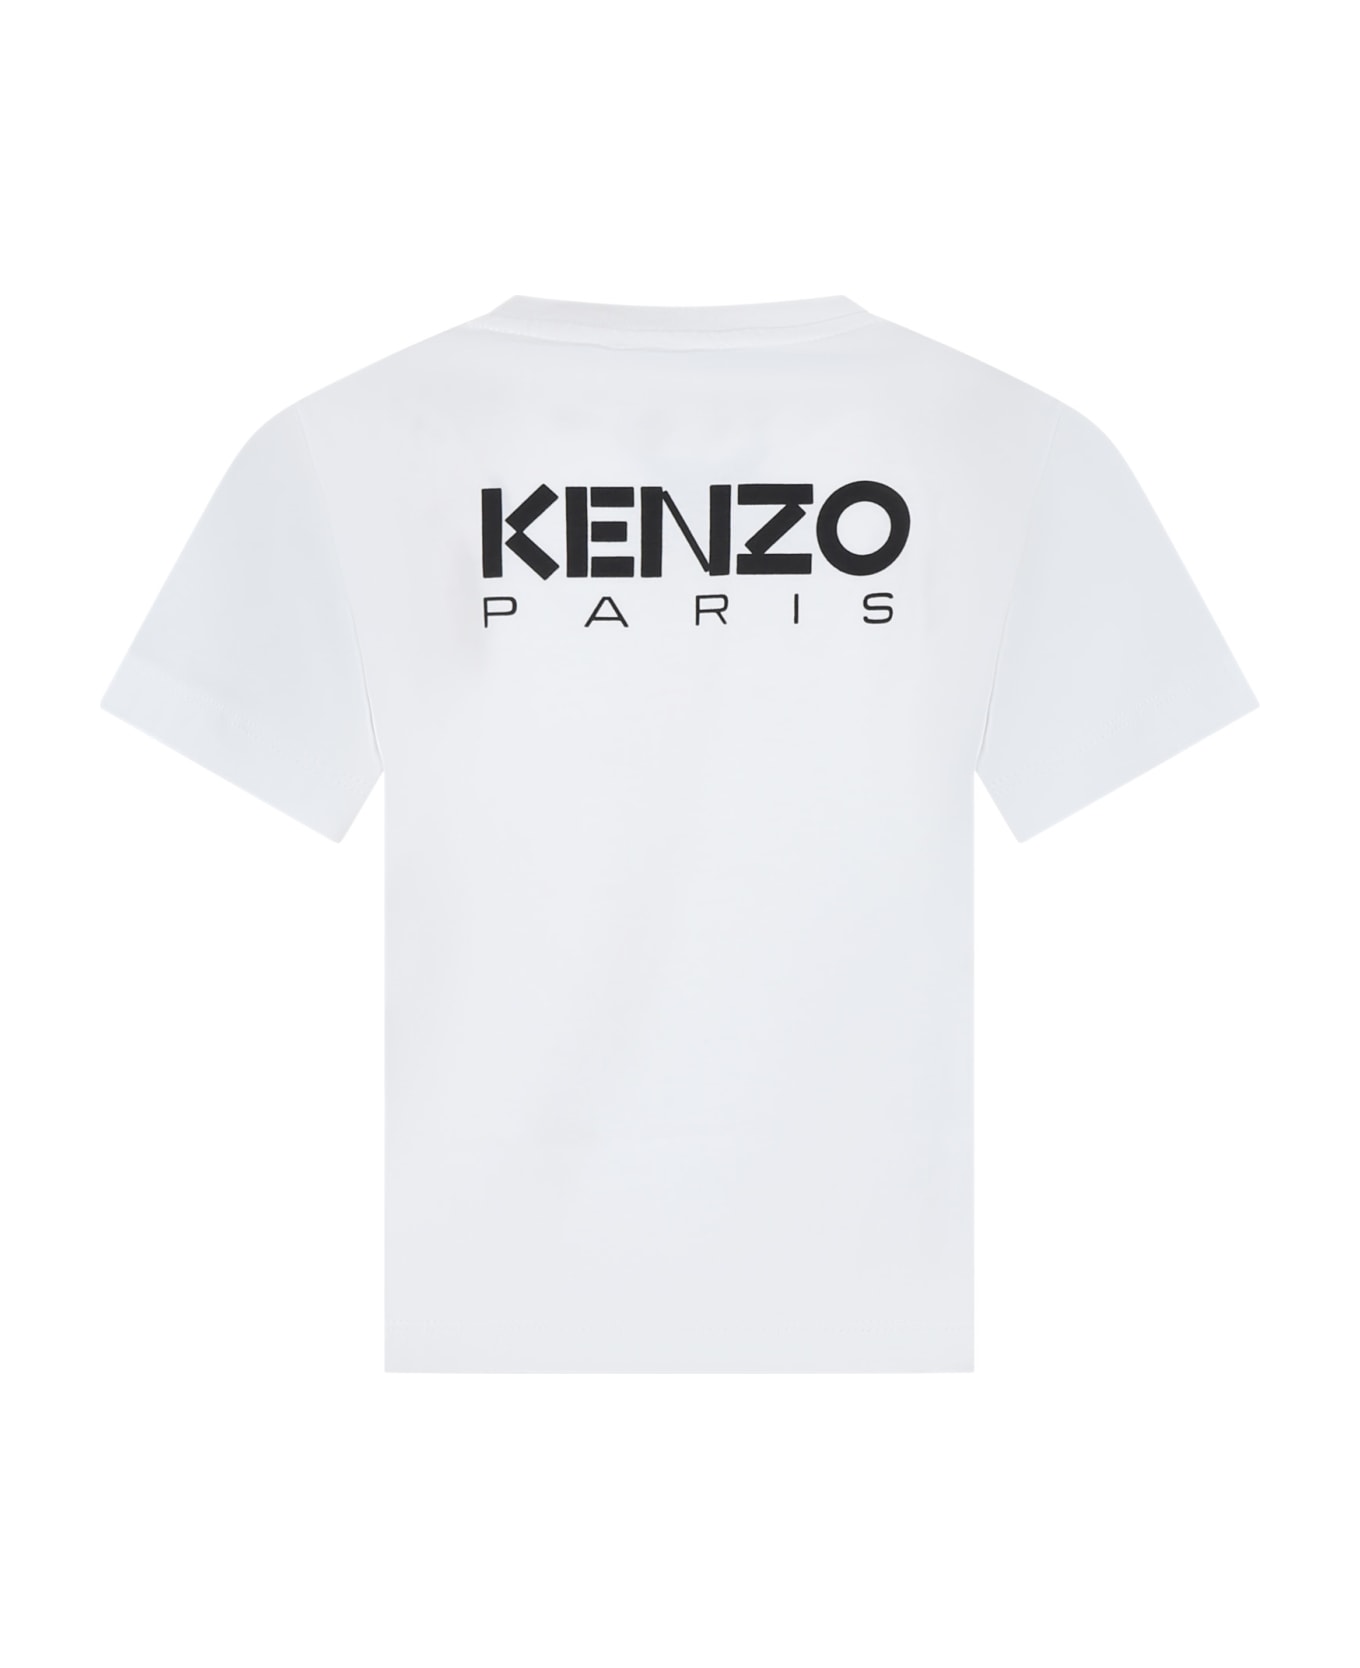 Kenzo Kids White T-shirt For Girl With Flower - White